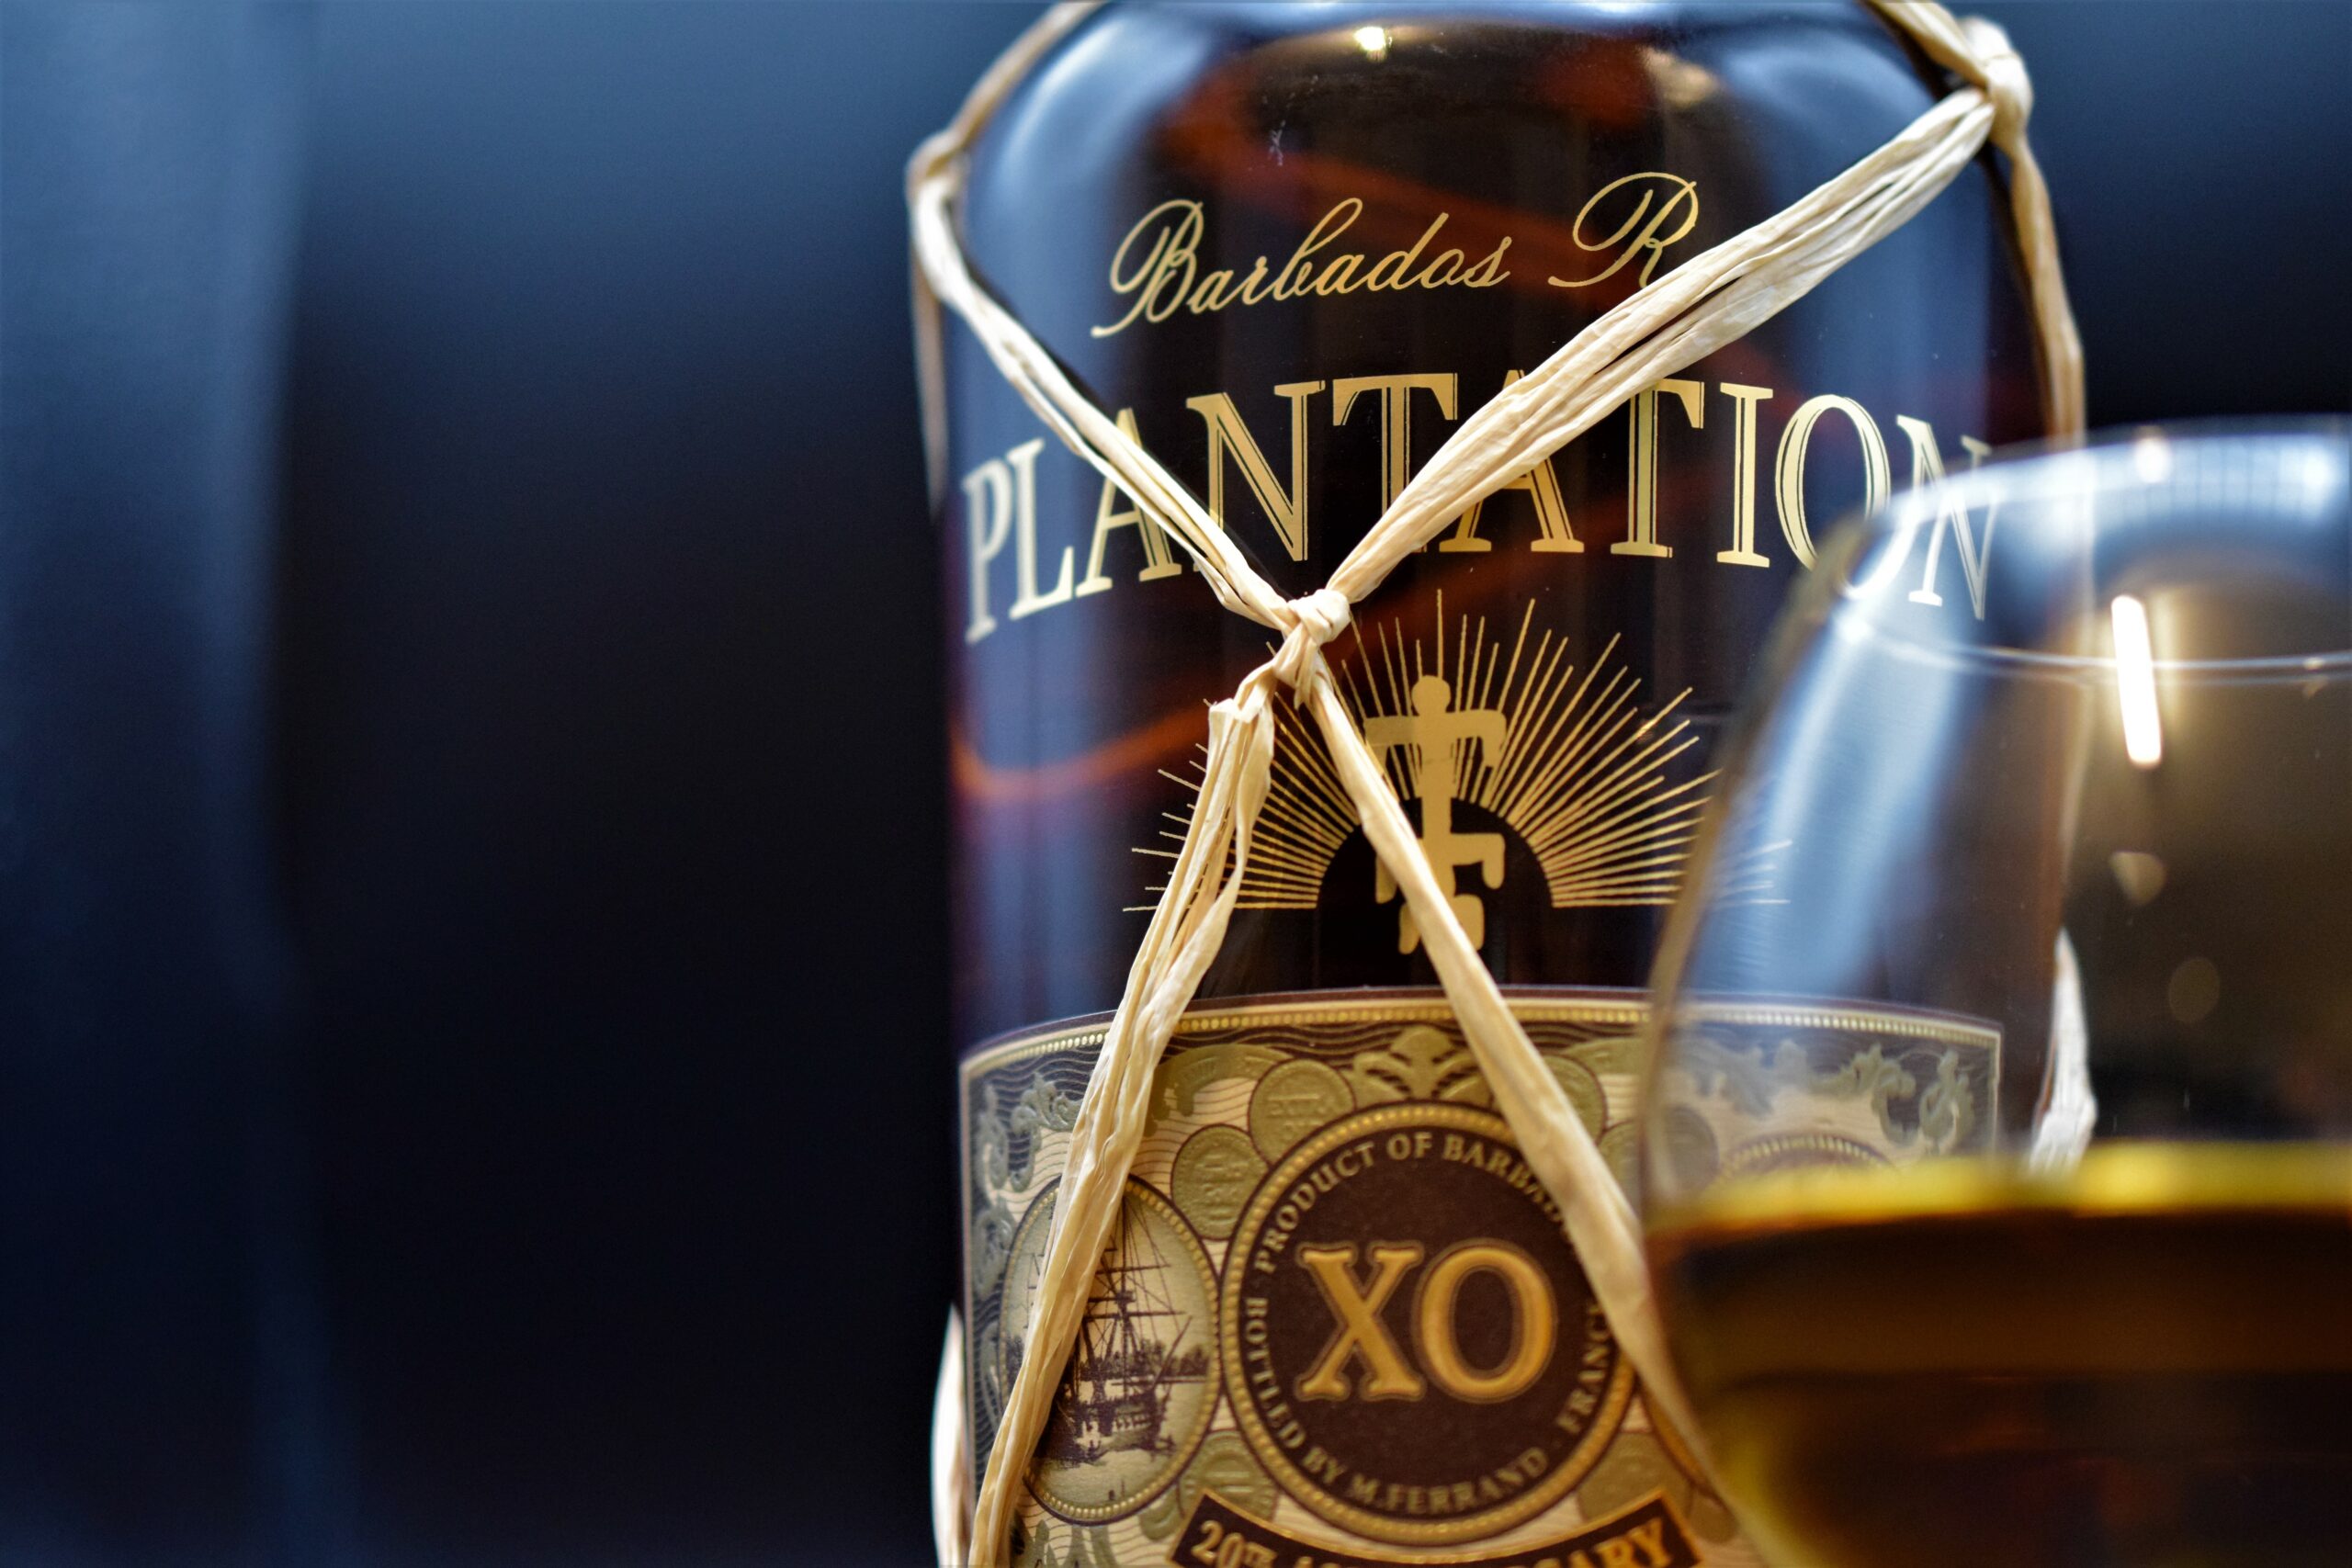 Plantation Rum XO 20th Anniversary